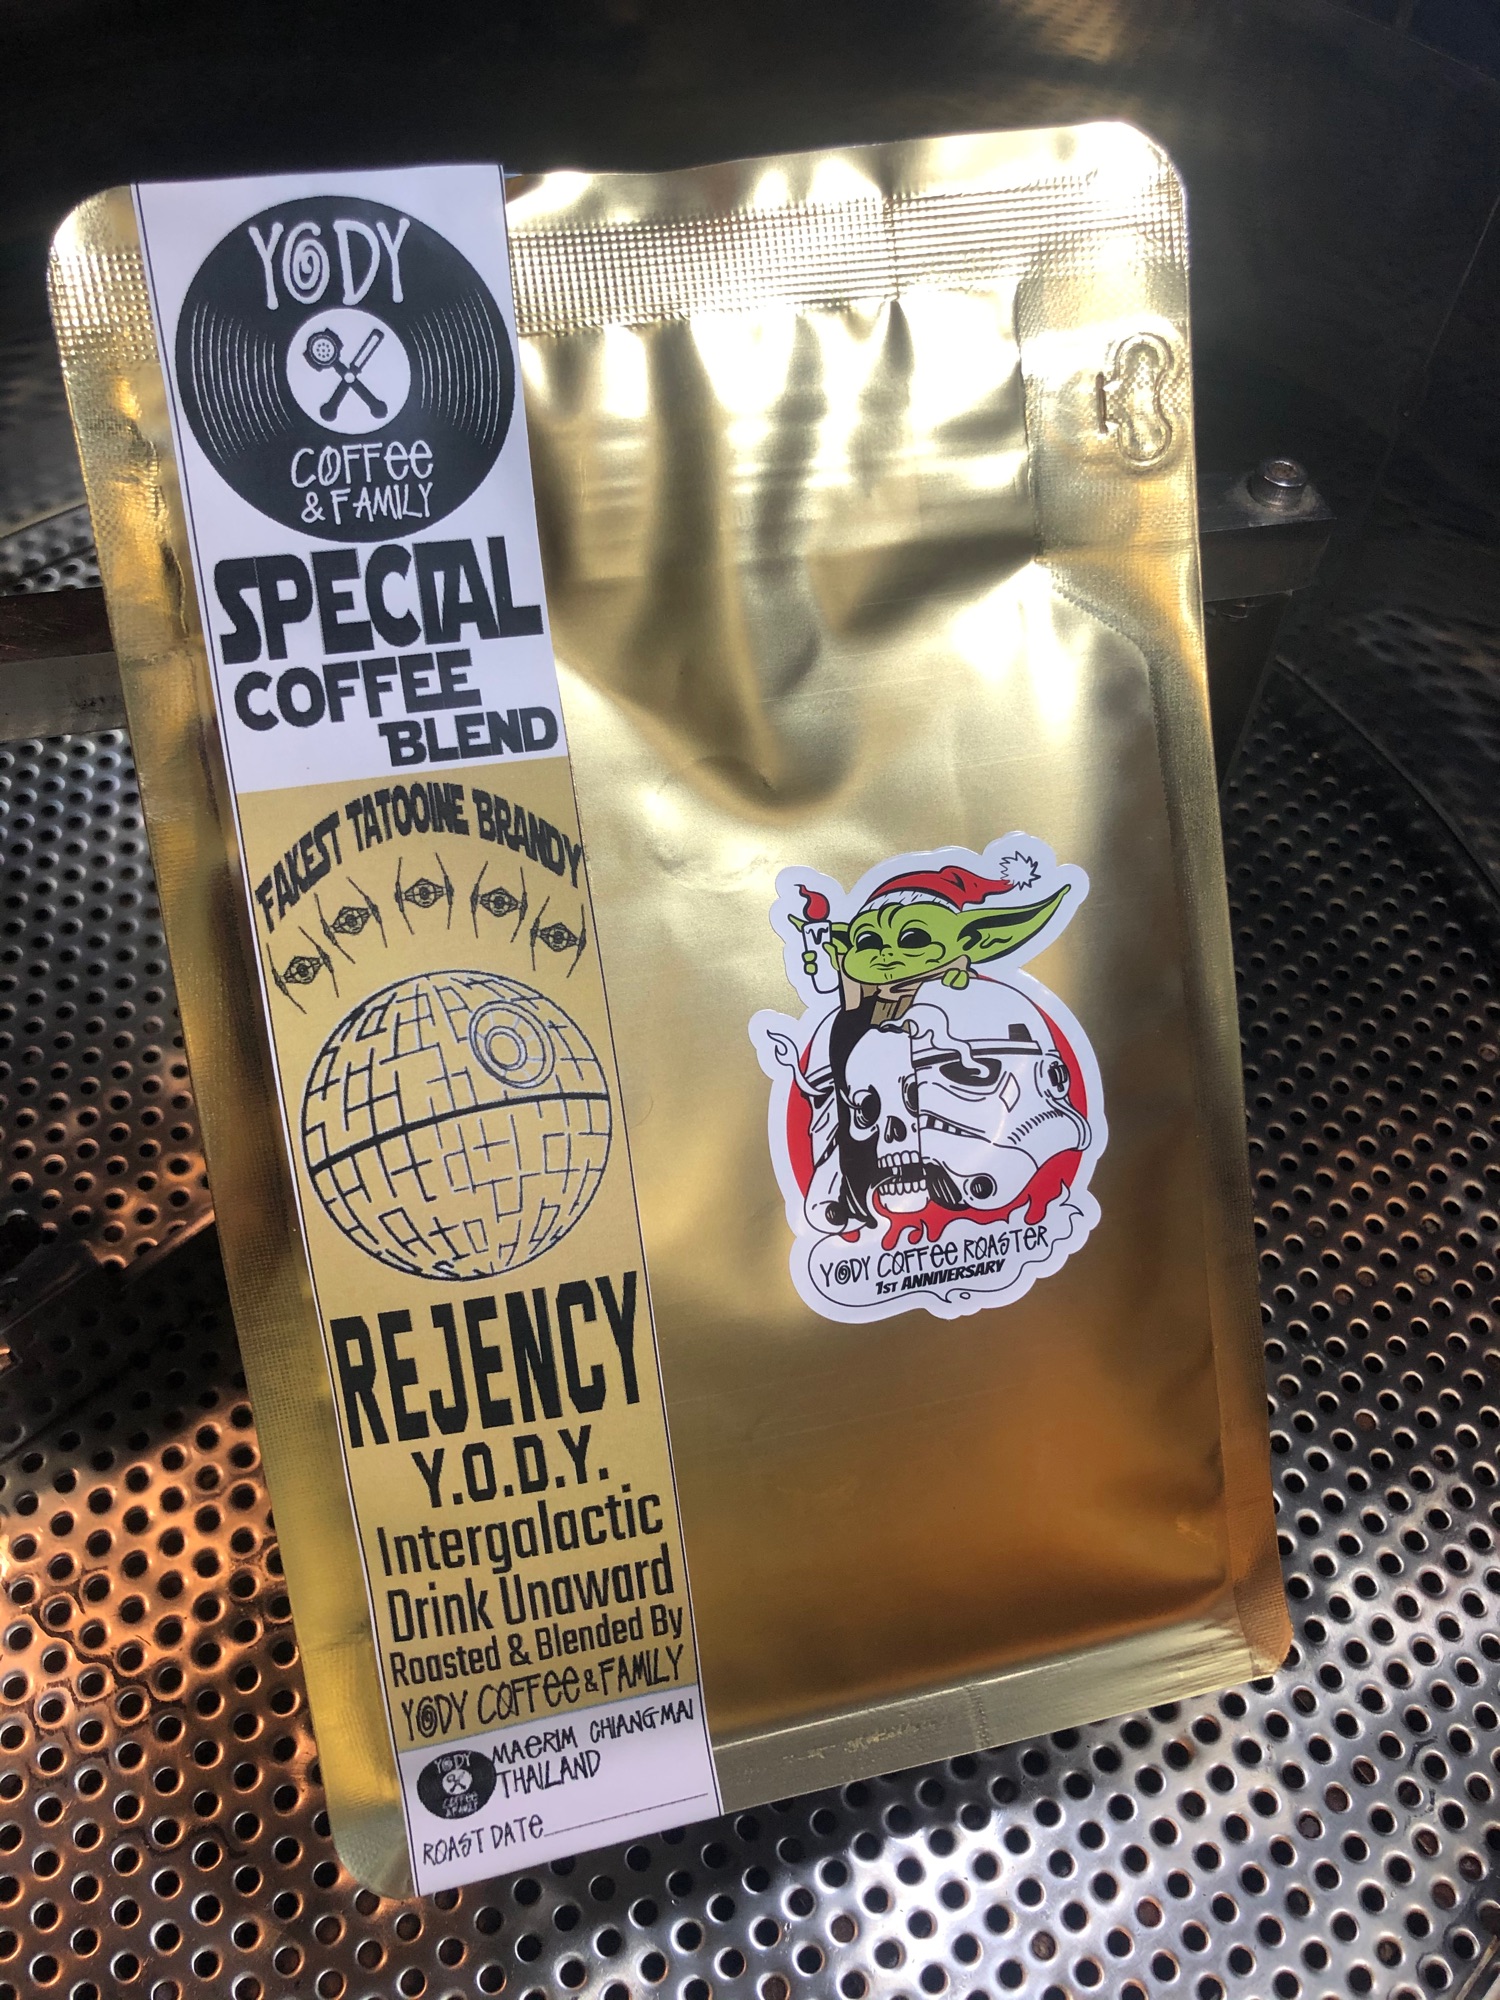 Rejency Coffee Blend Yody Coffee เมล็ดกาแฟคั่วโปรเซสโดยการบ่มในถังเหล้ารัม (rum barrel aging) ขนาด 100 กรัม